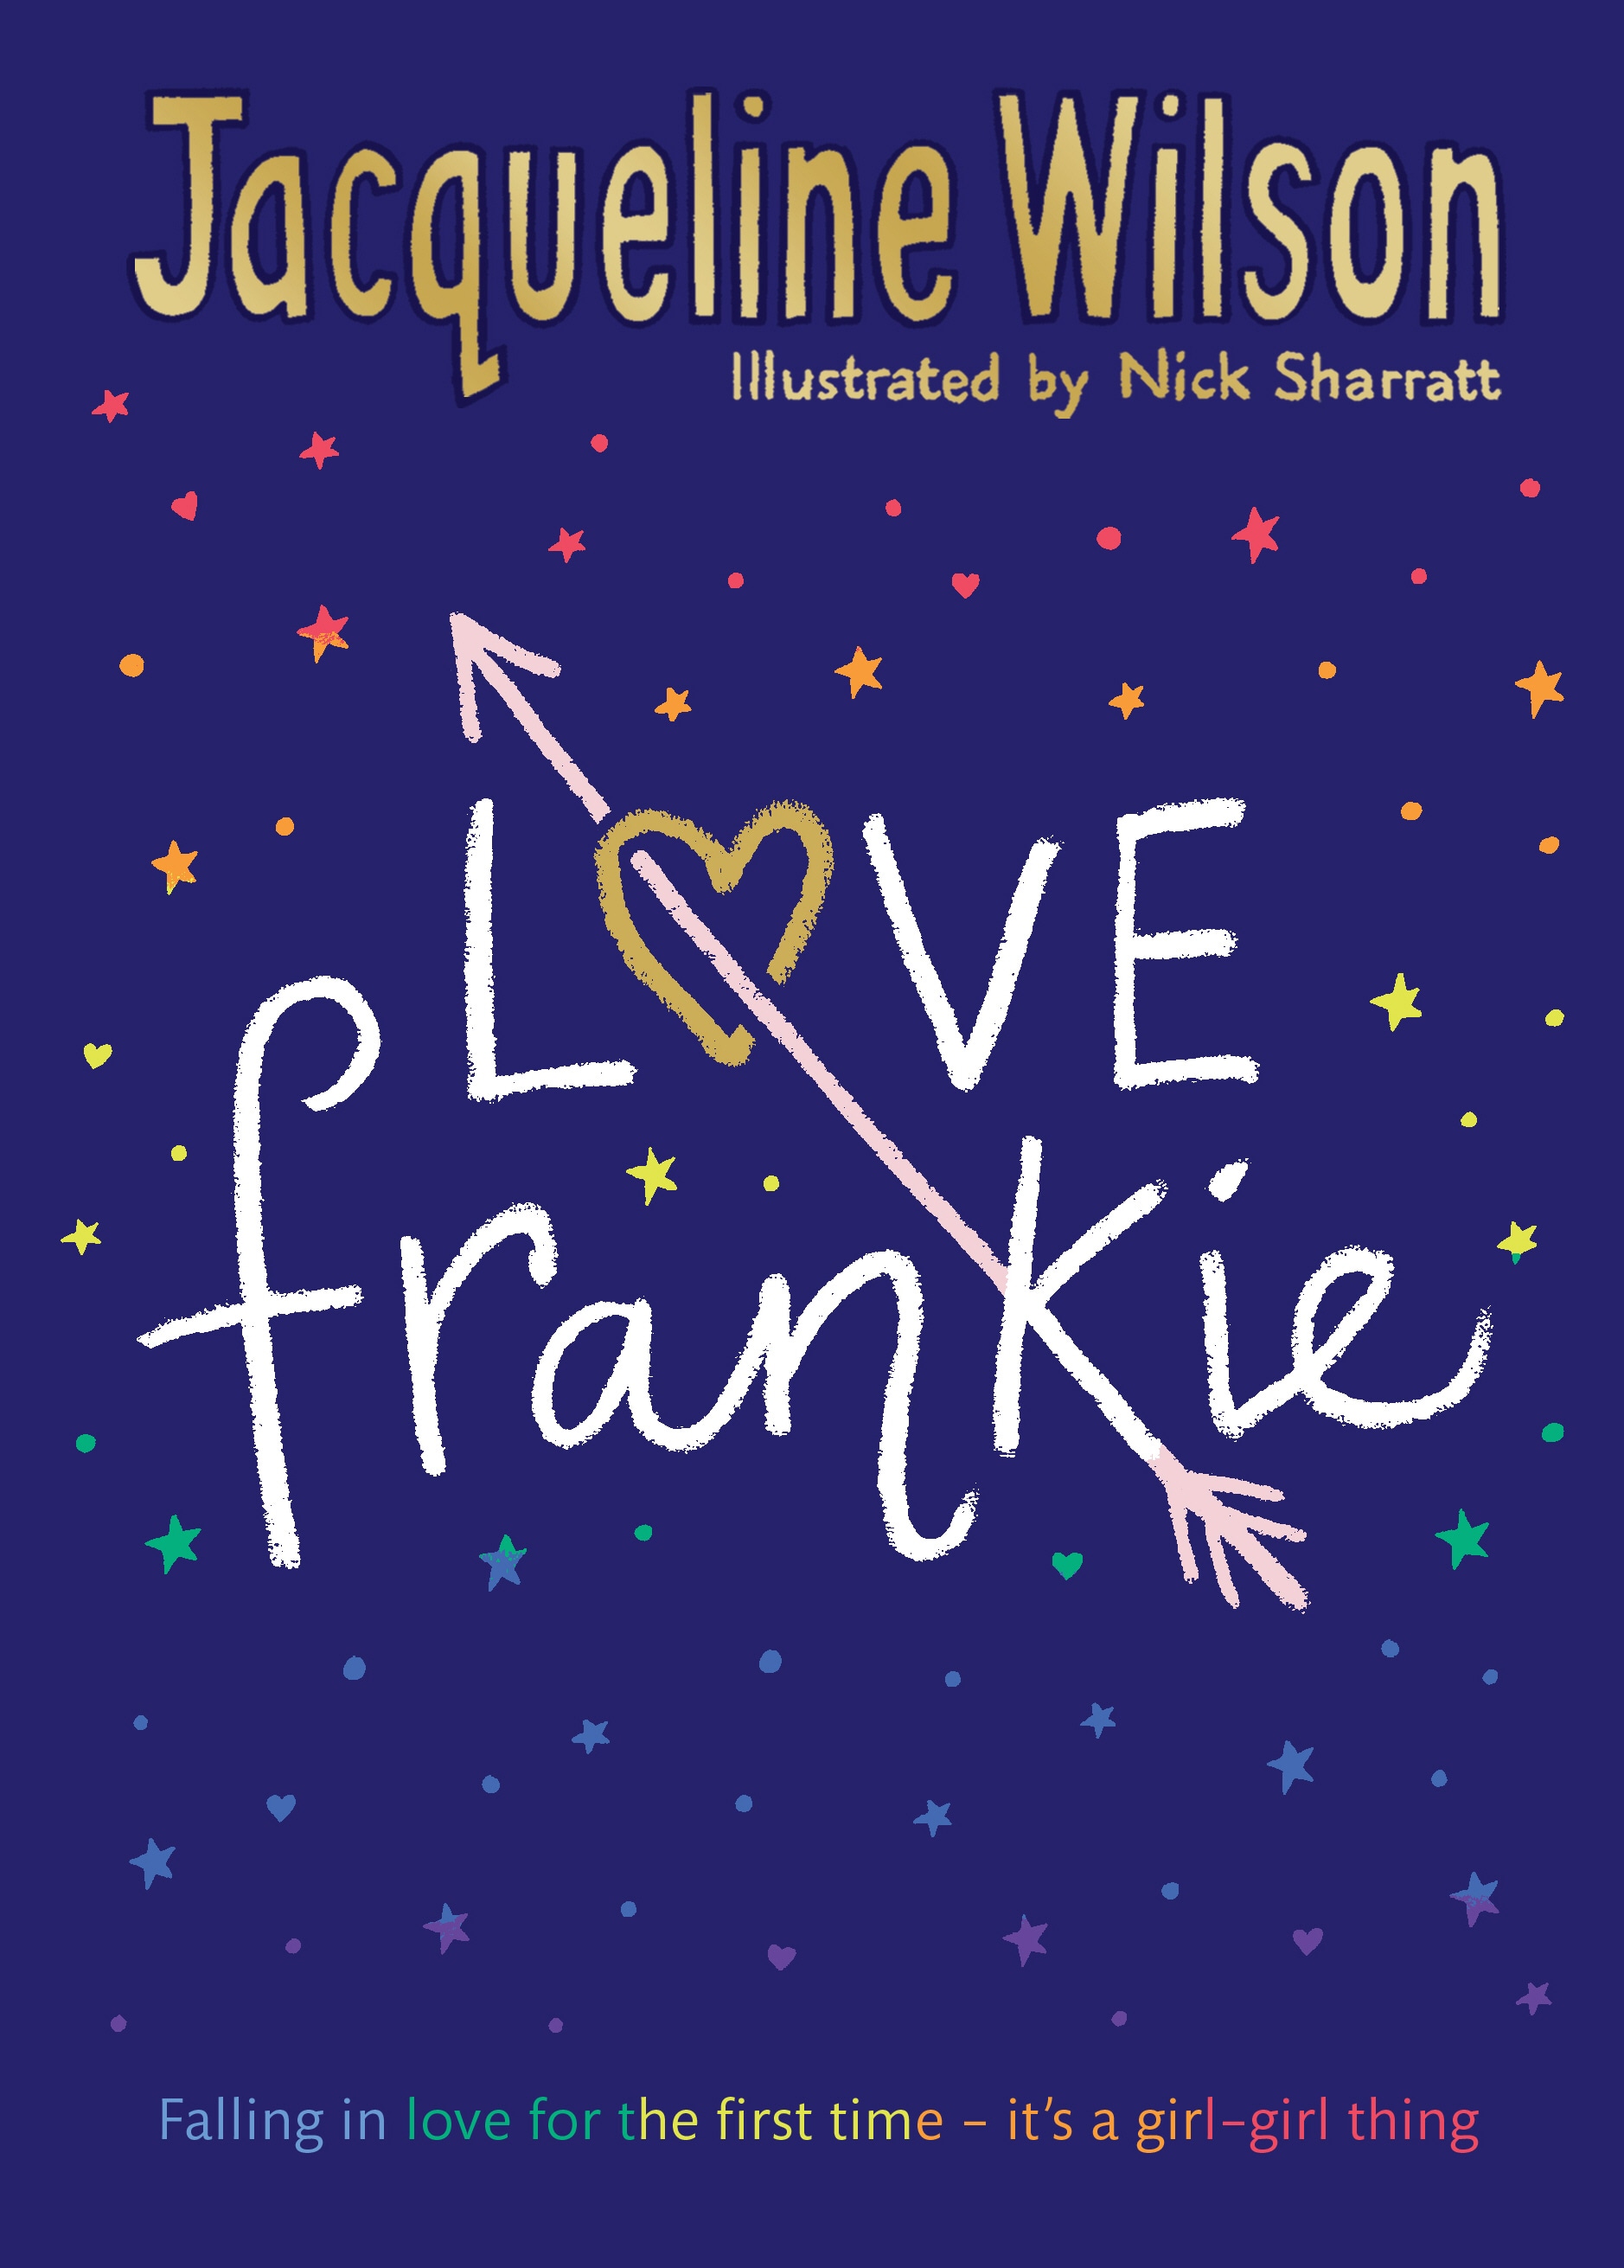 Book “Love Frankie” by Jacqueline Wilson — September 17, 2020